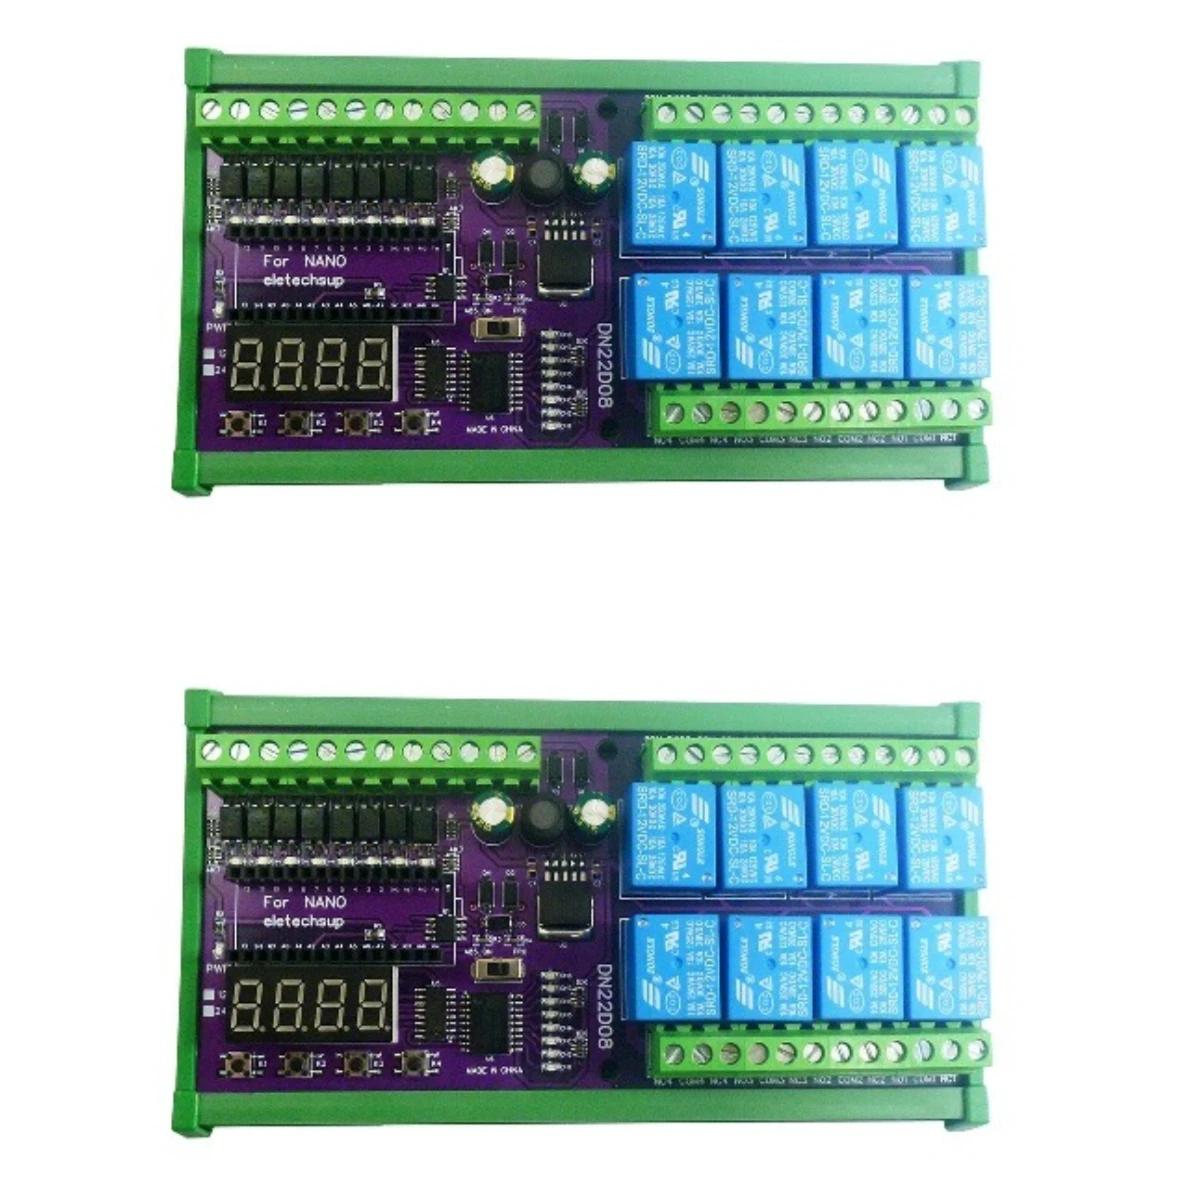 

2PCS DN22D08 DC 12V 24V 8ch Multifunction Delay Timer Switch Board RS485 PLC IO Expanding Shield Module for Arduino NANO V3.0